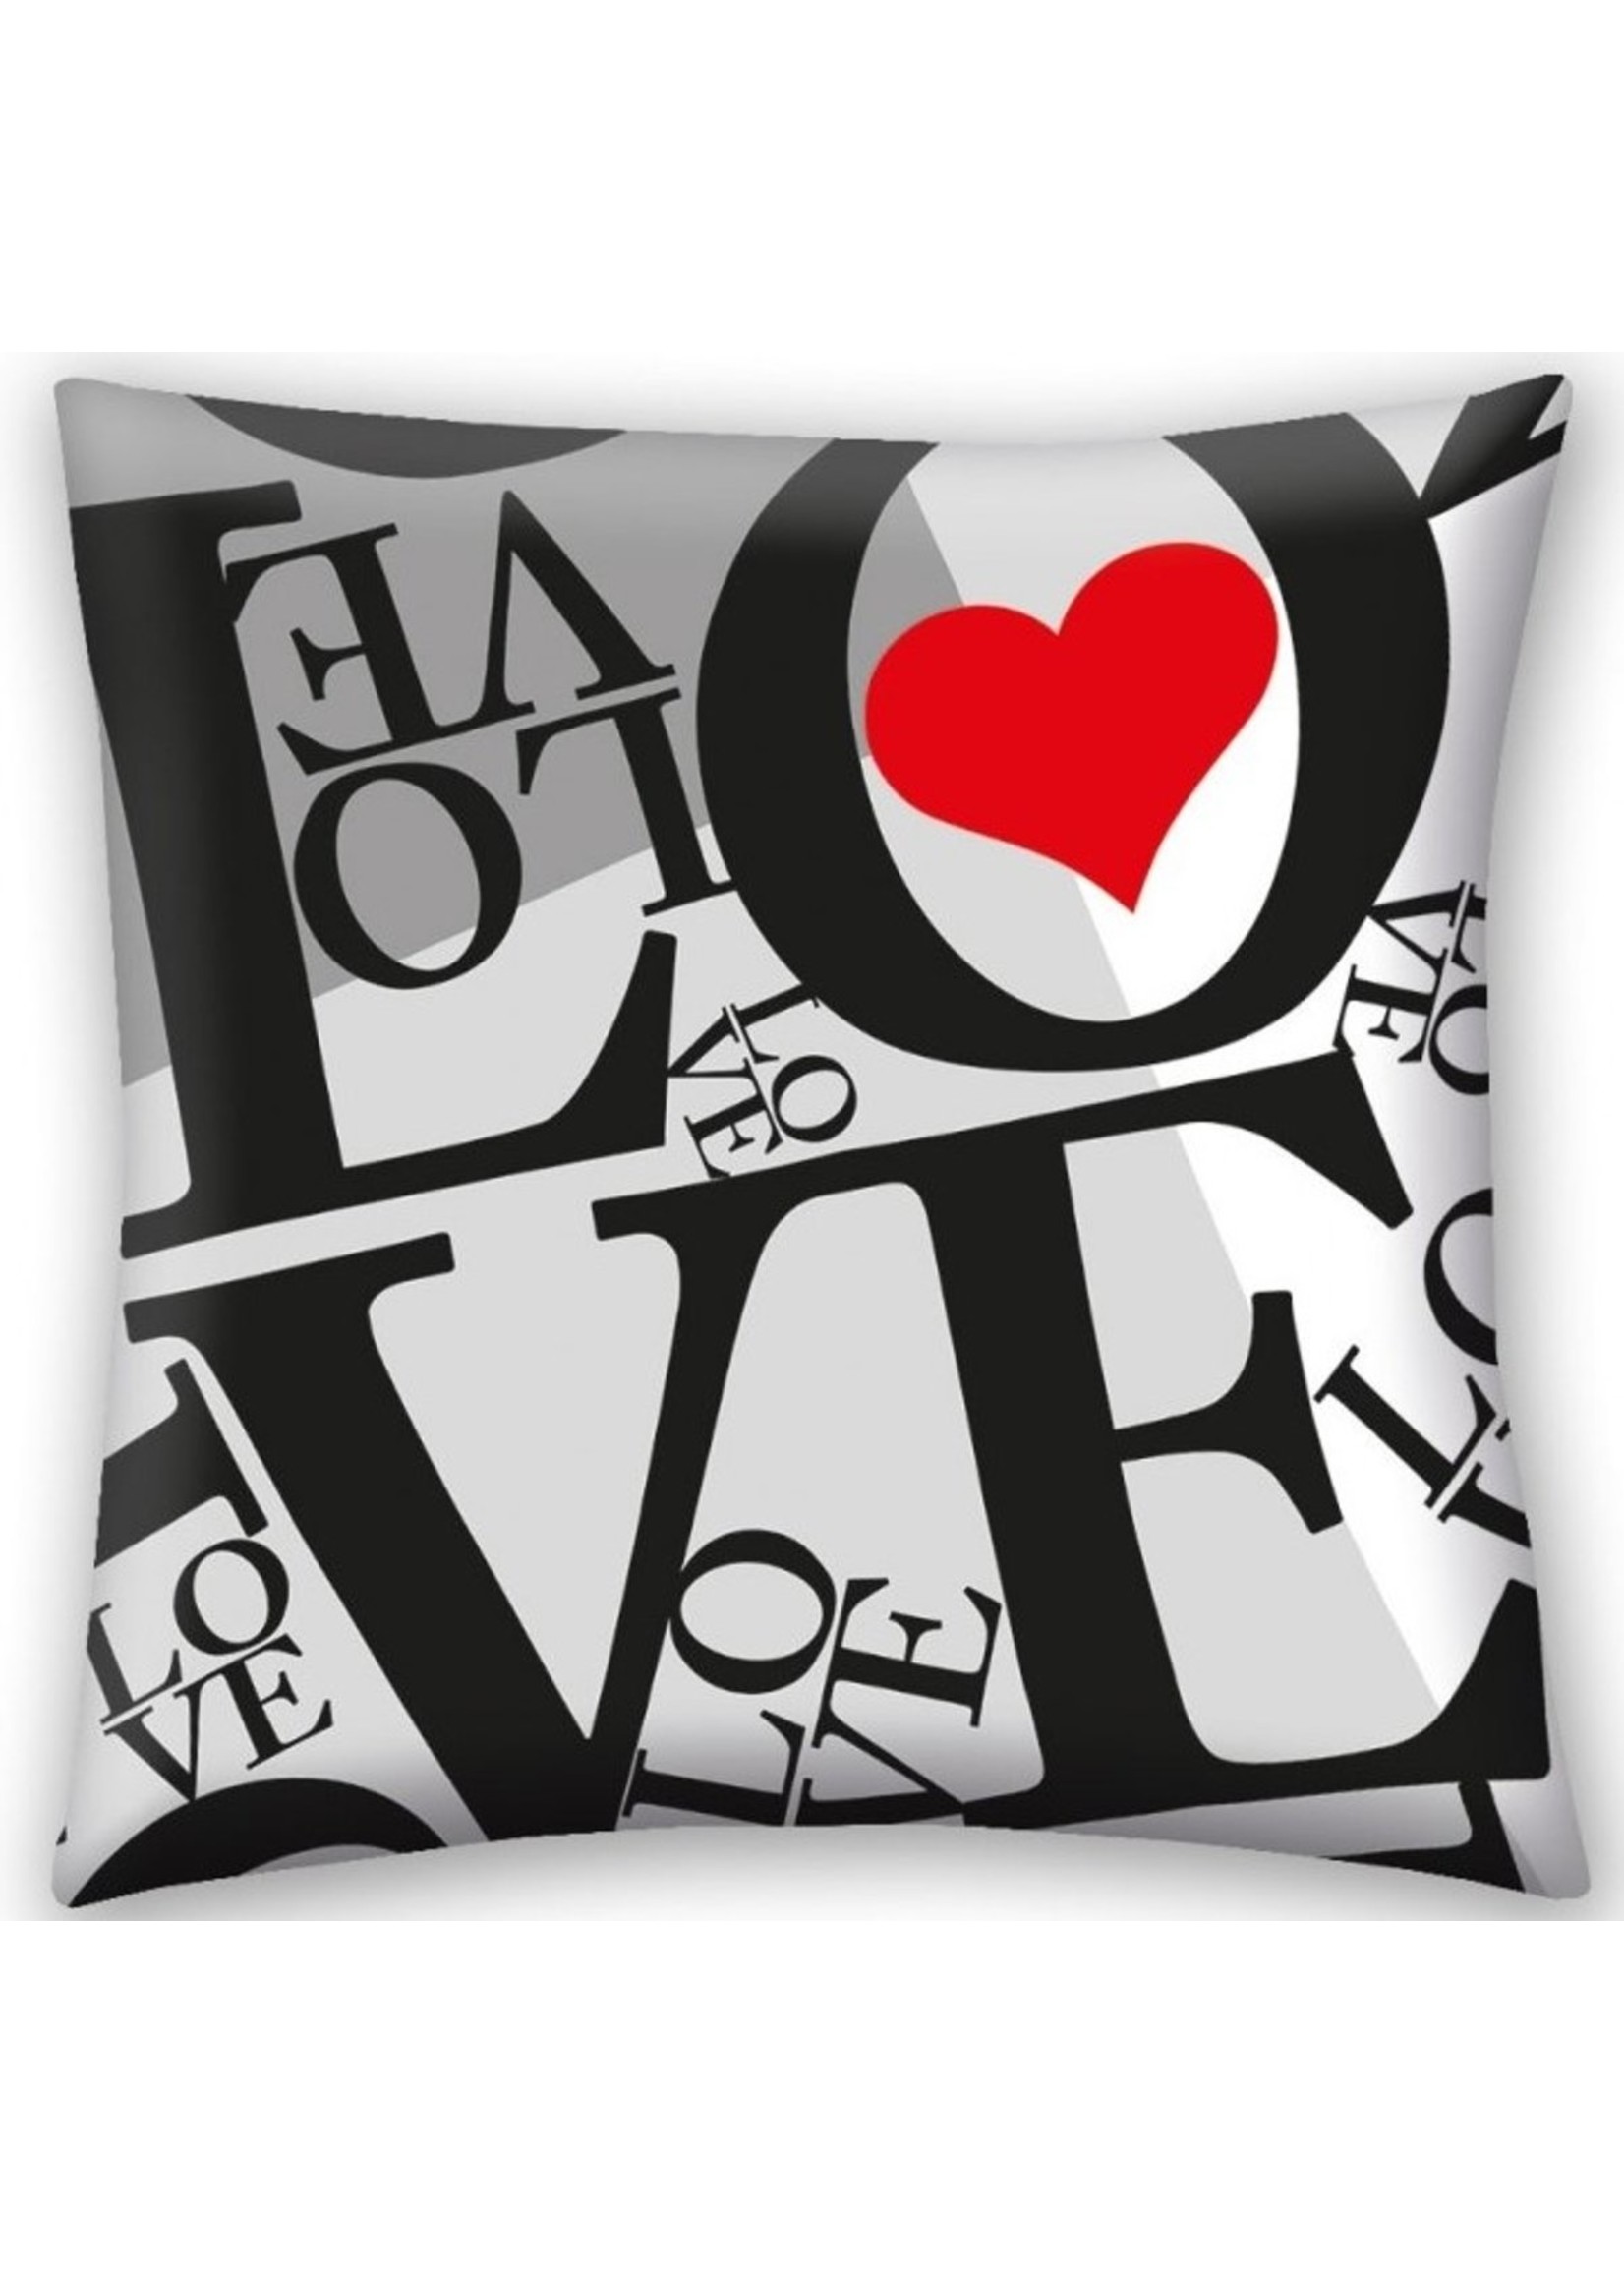 LOVE Cushion